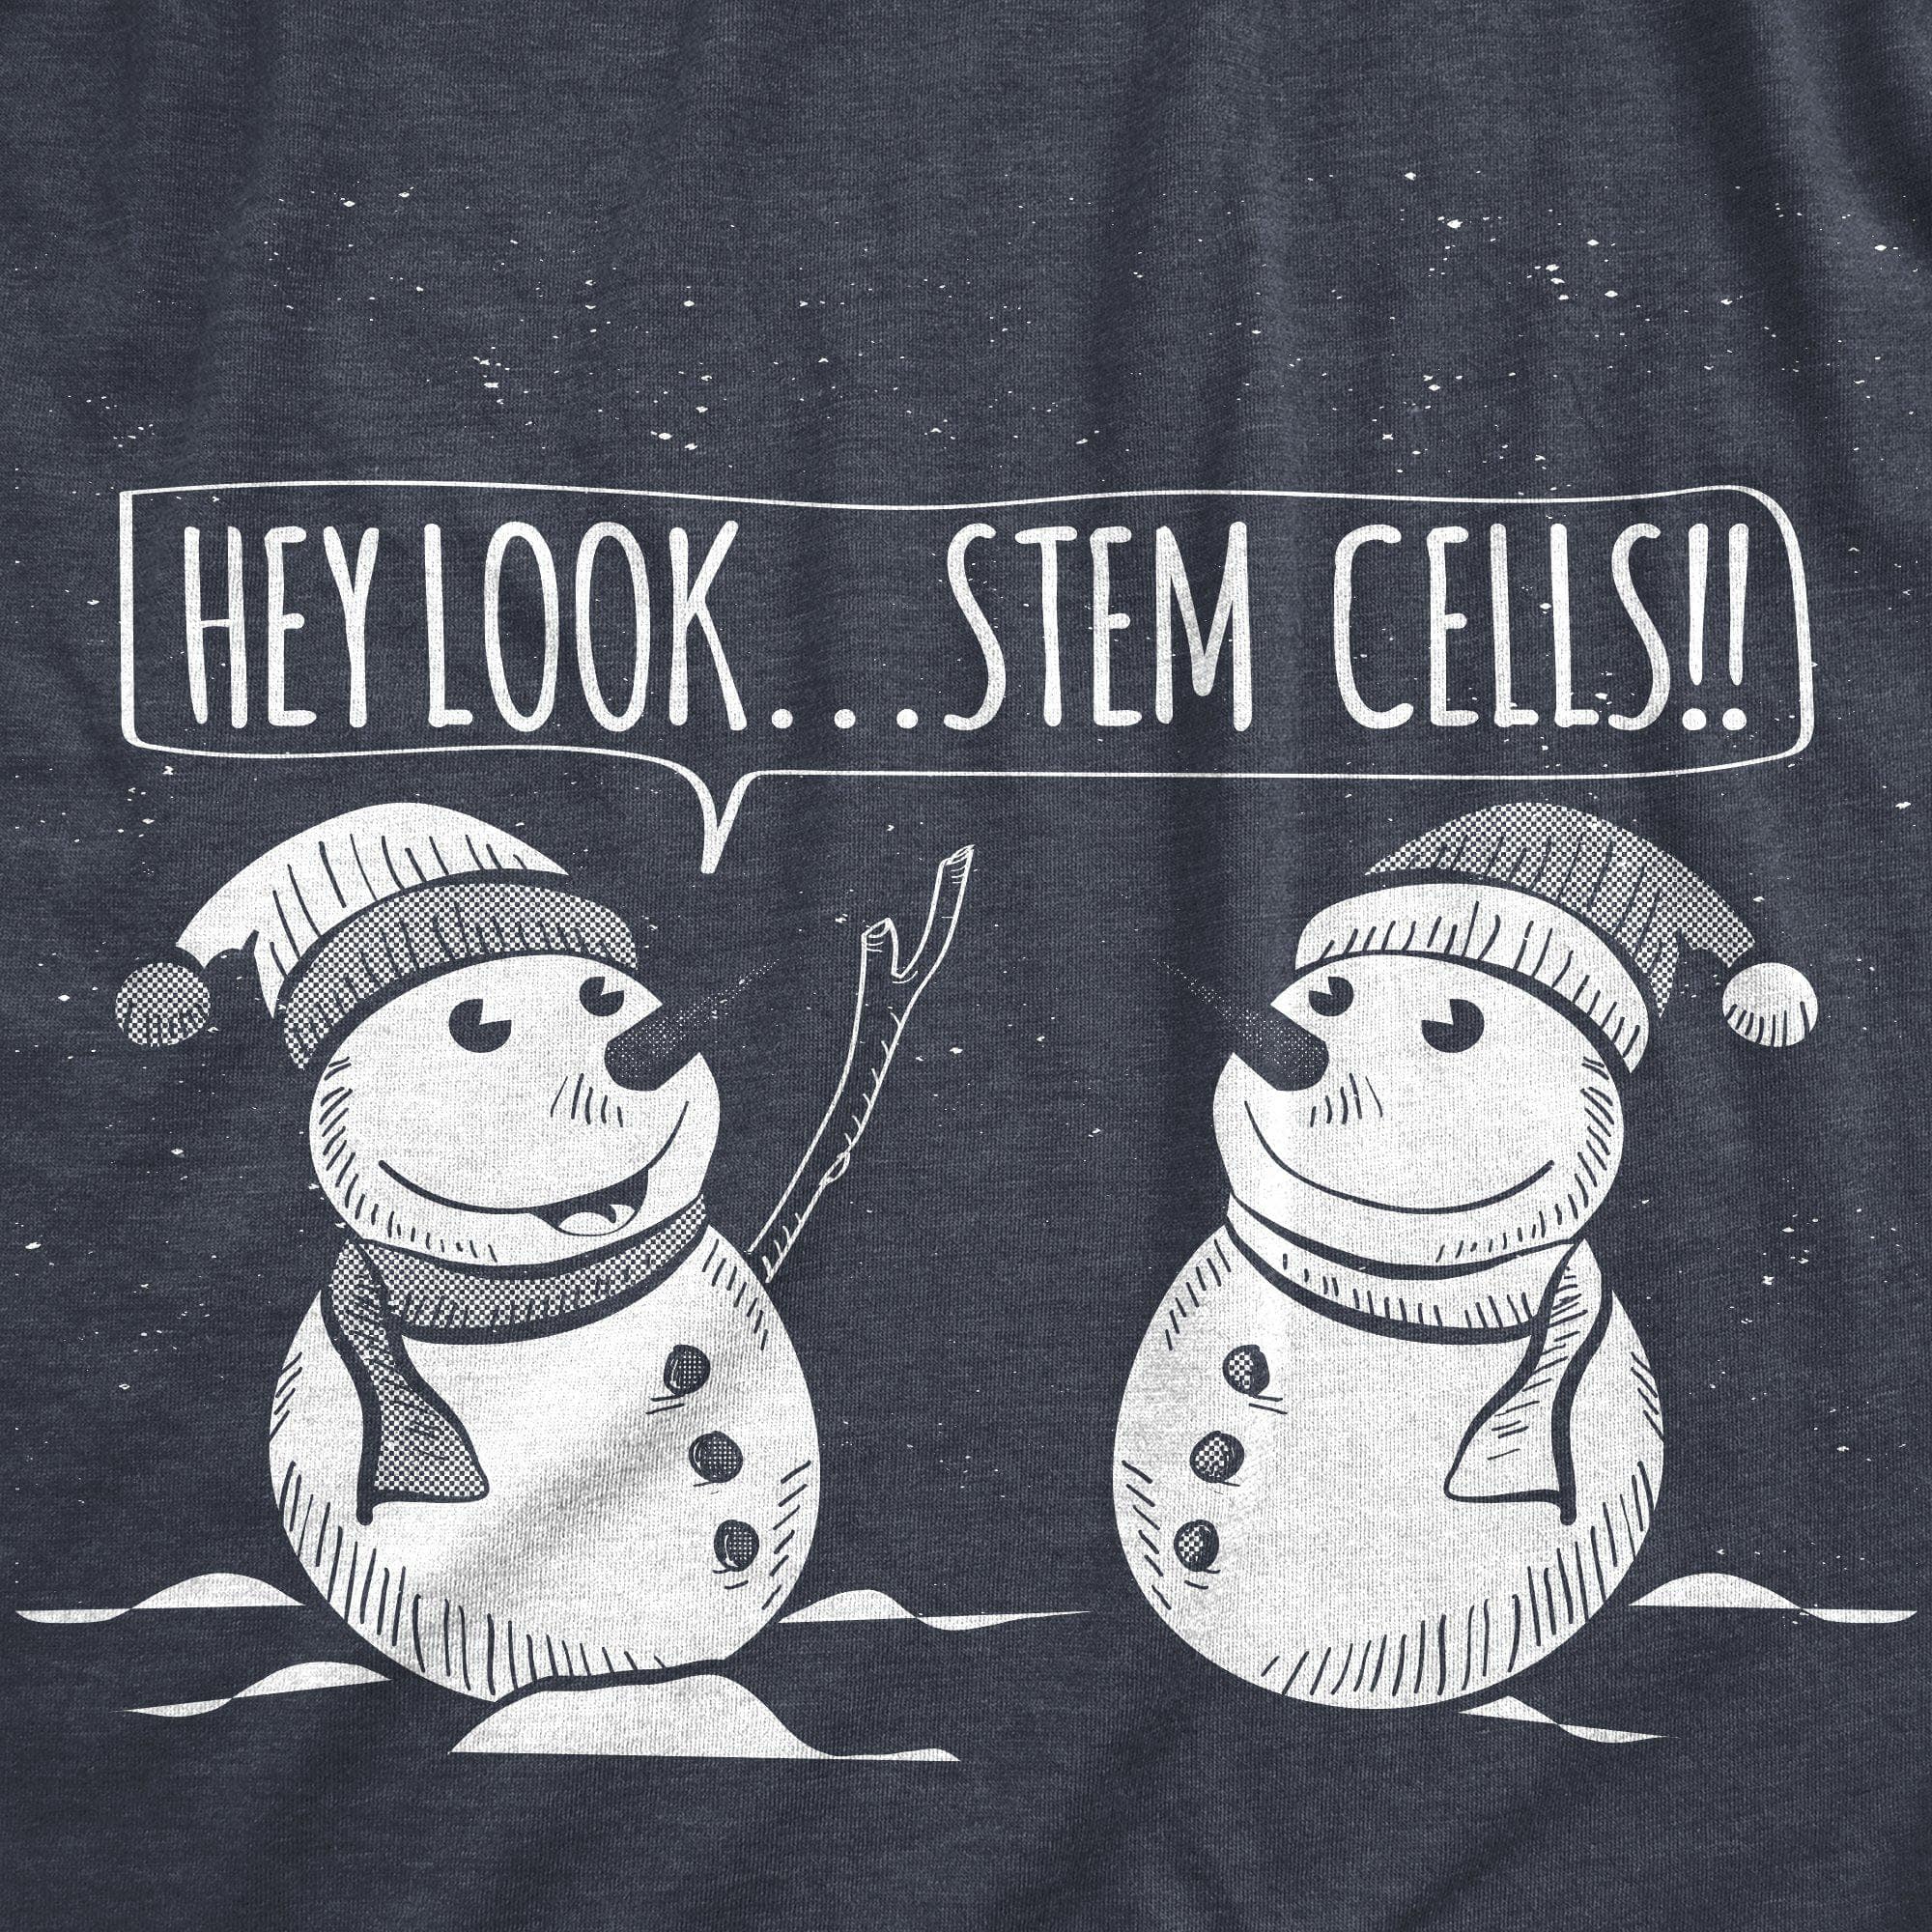 Hey Look Stem Cells Men's Tshirt - Crazy Dog T-Shirts